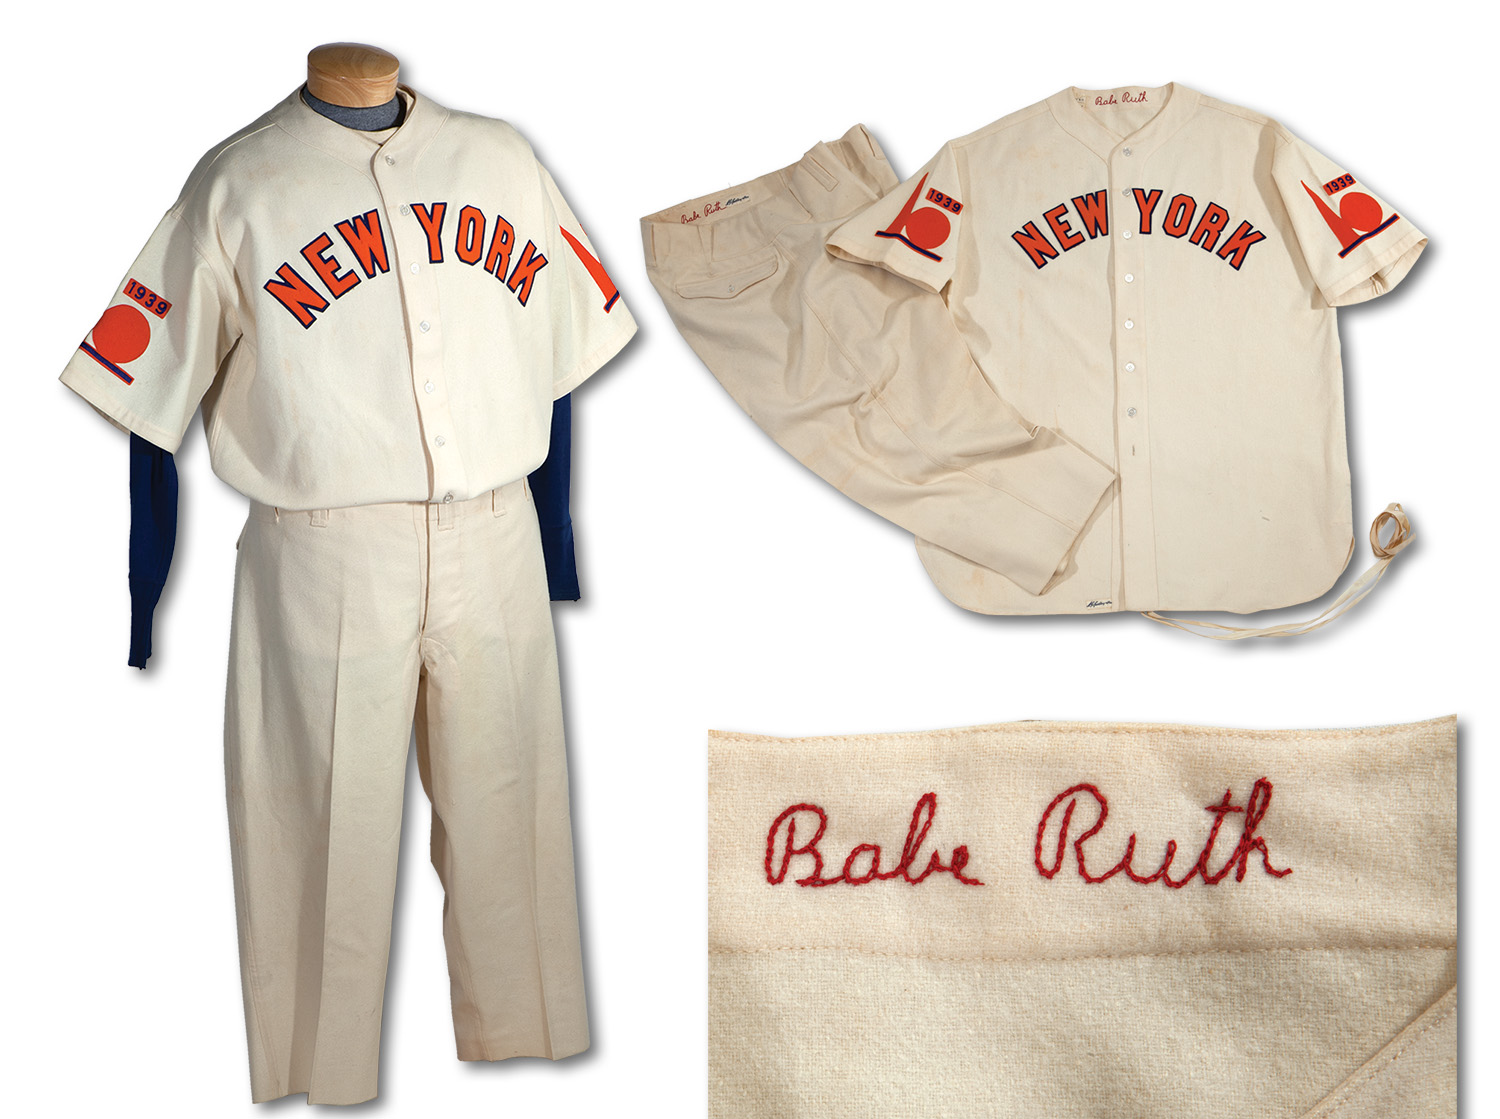 babe ruth's uniform